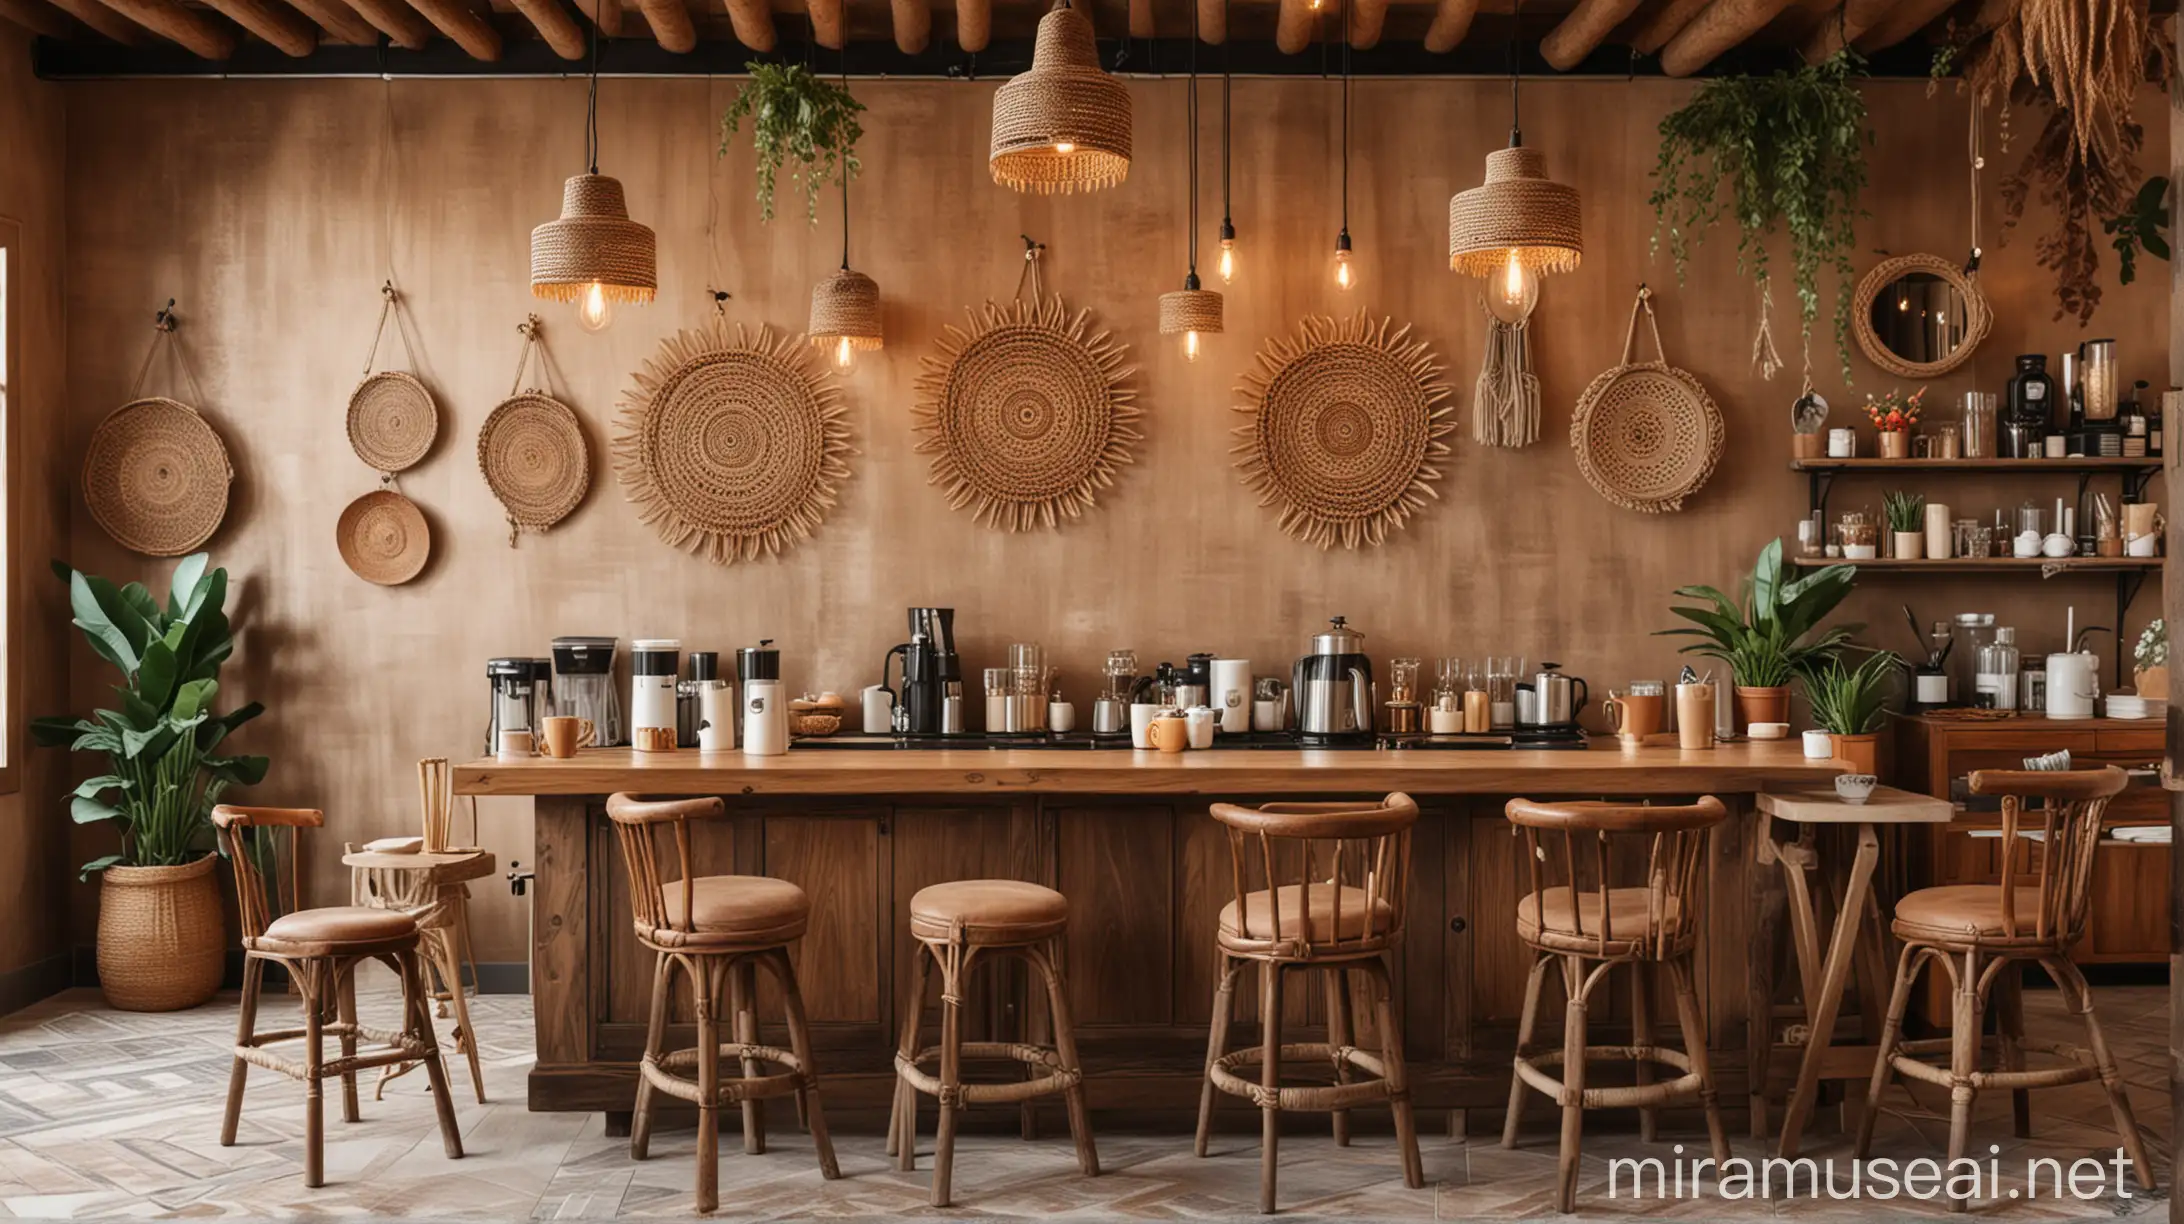 a coffee shop interior design boho style